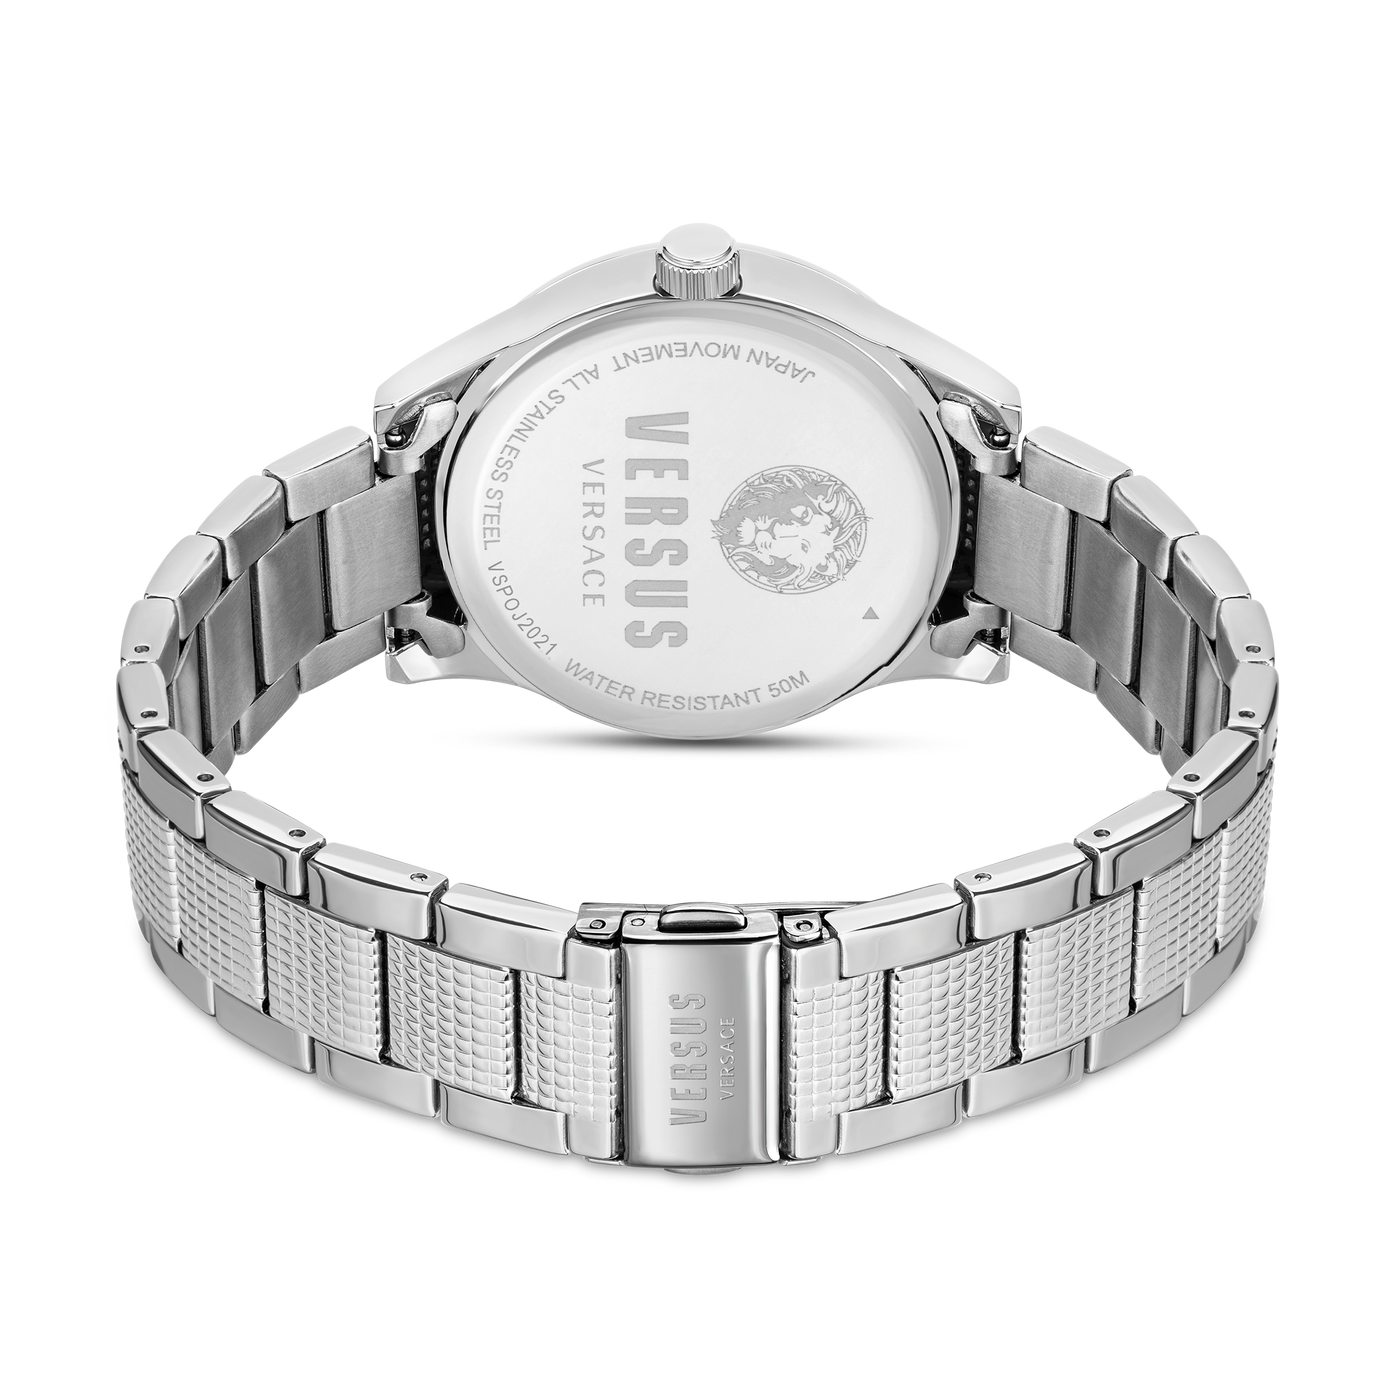 Versace Versus Unisex Chronograph Watch